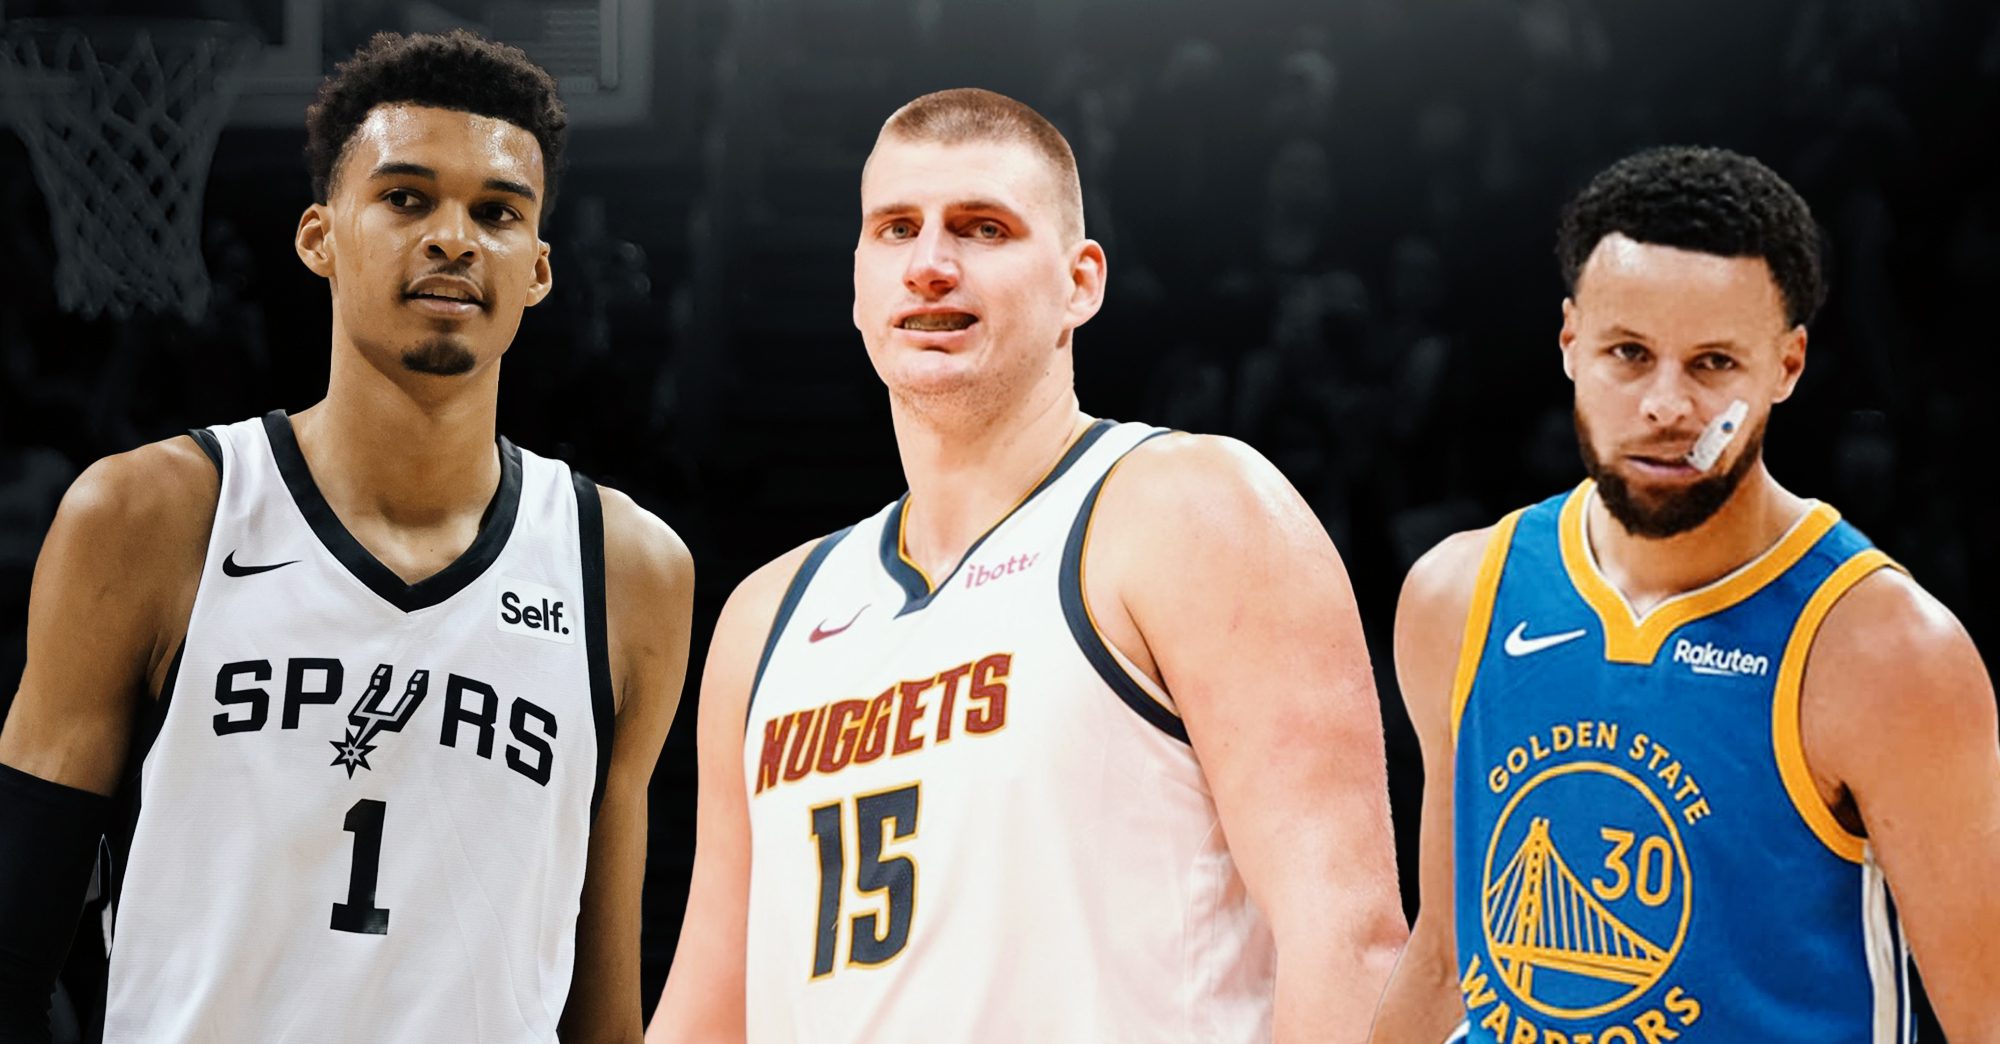 NBA Announces Finalists For Season Awards: MVP, DPOY, ROTY & More